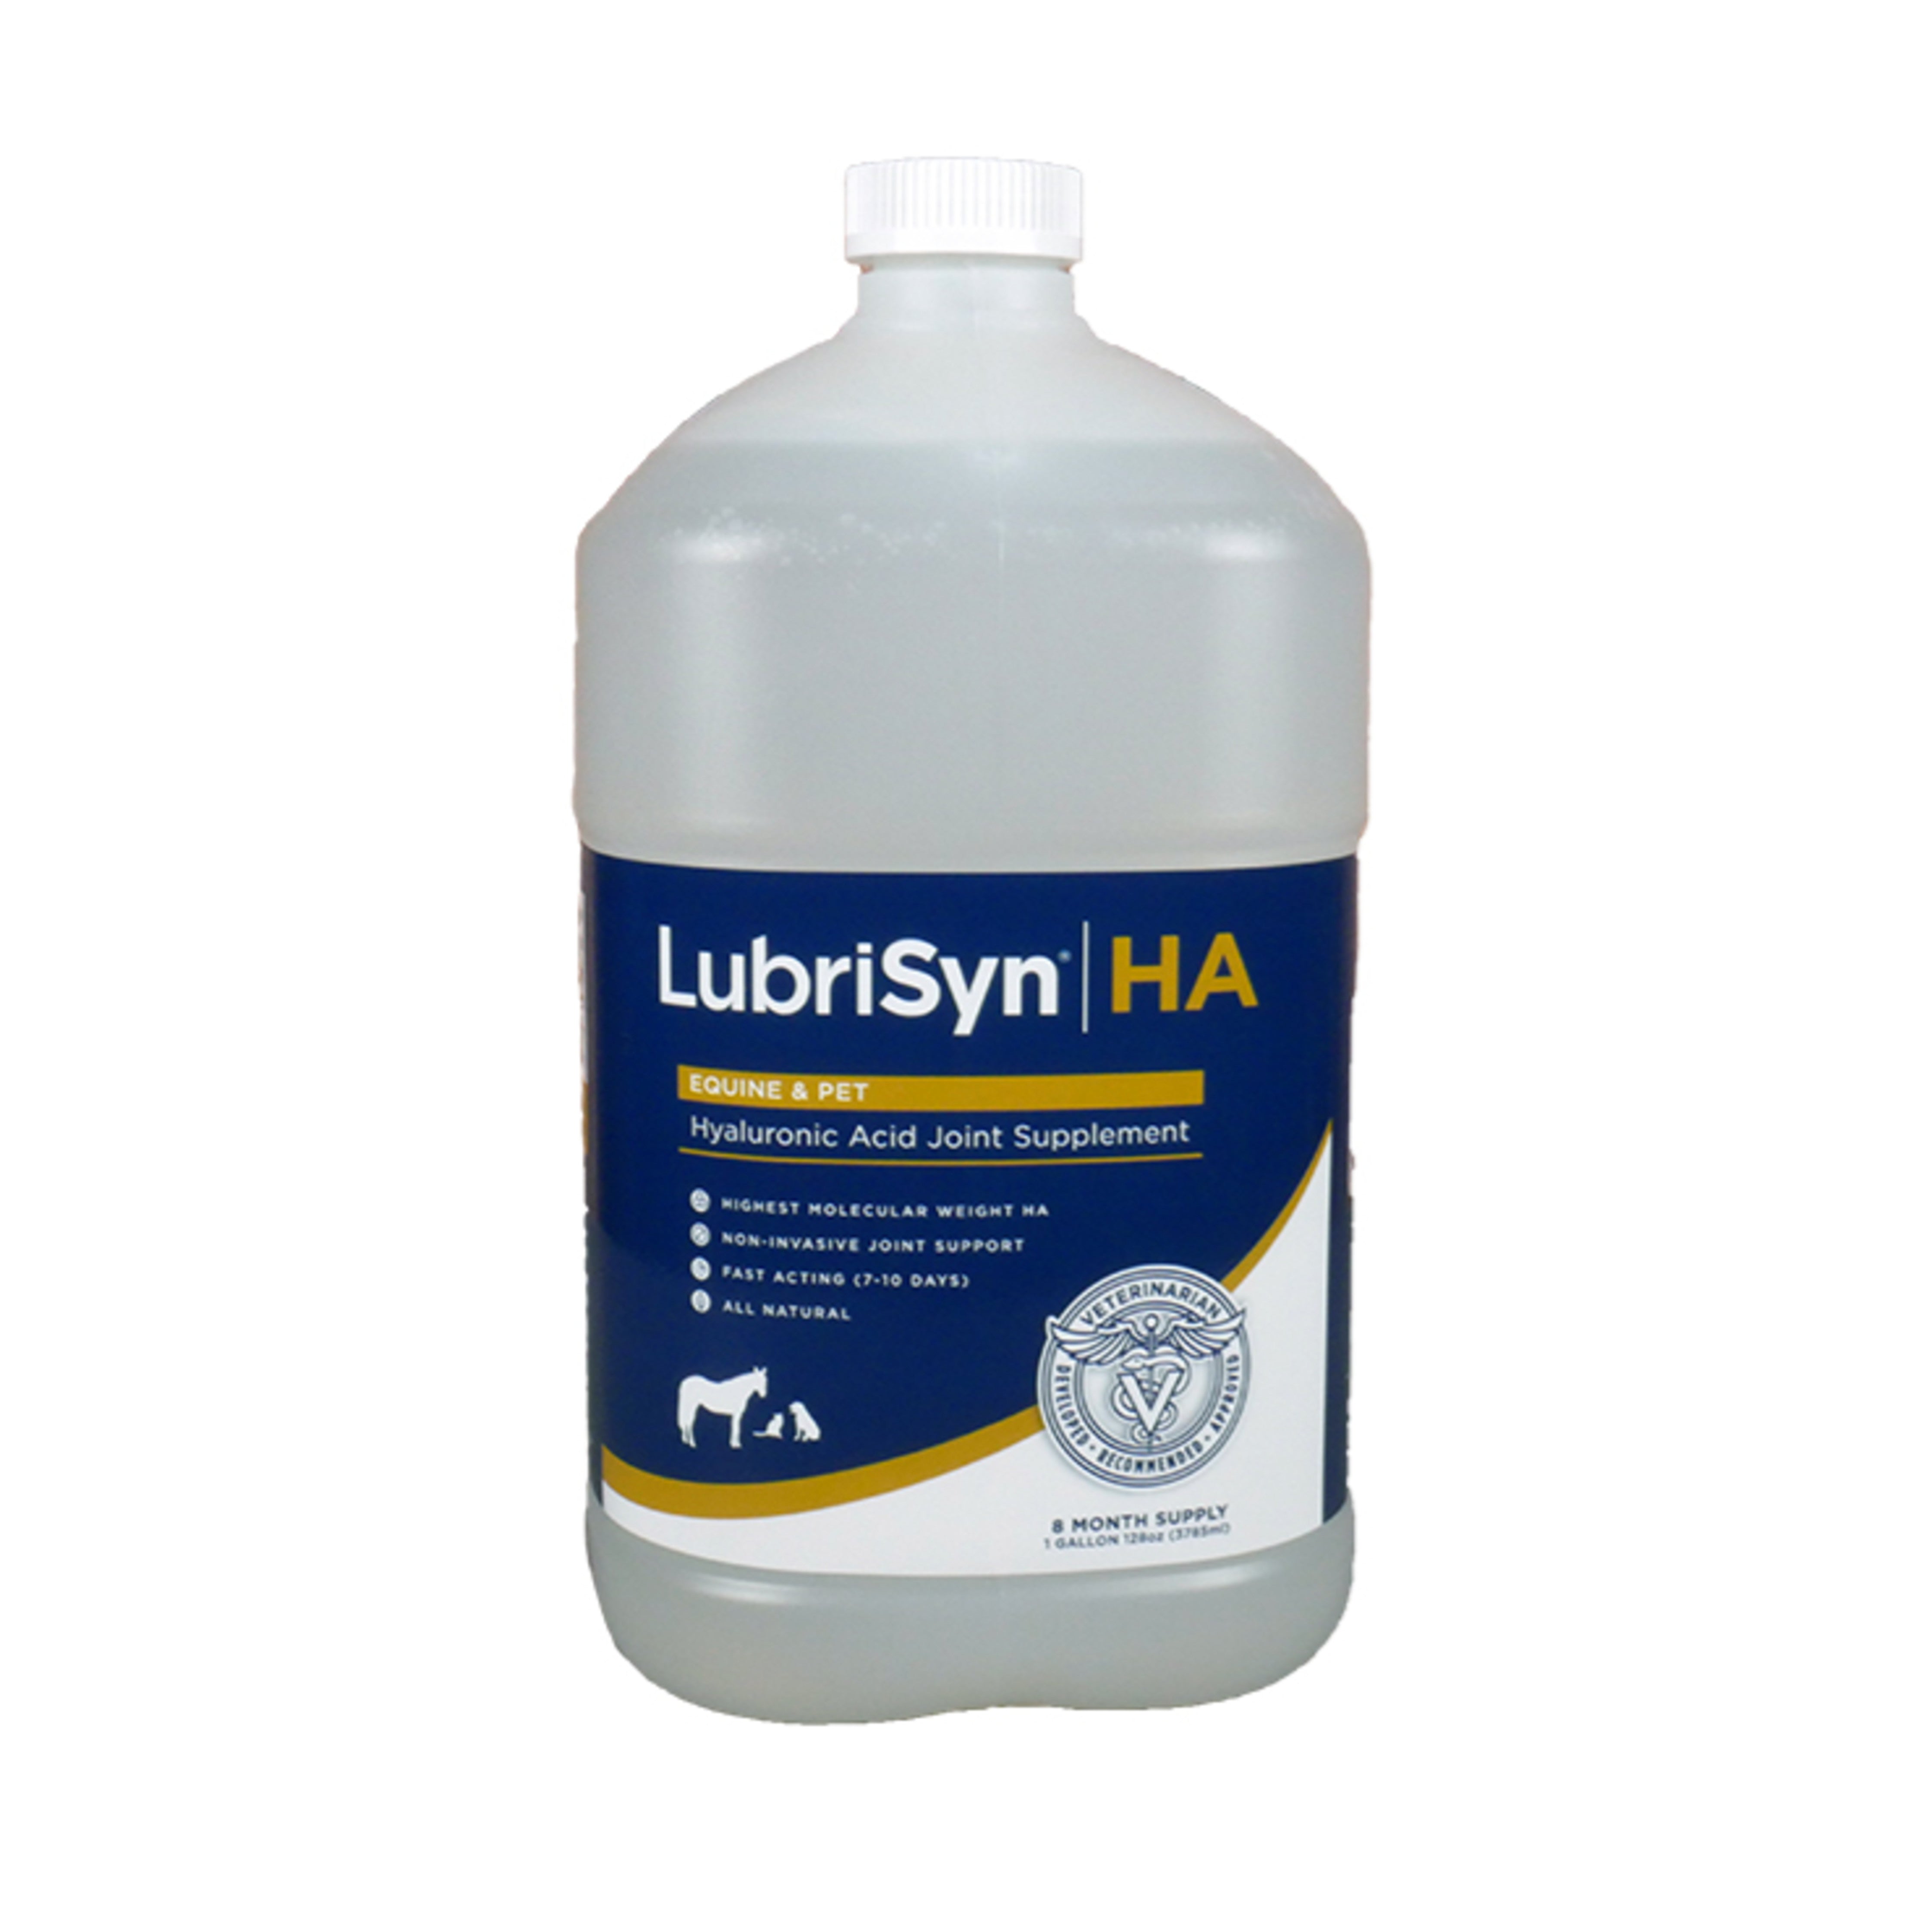 Lubrisyn gallon (8 month supply)